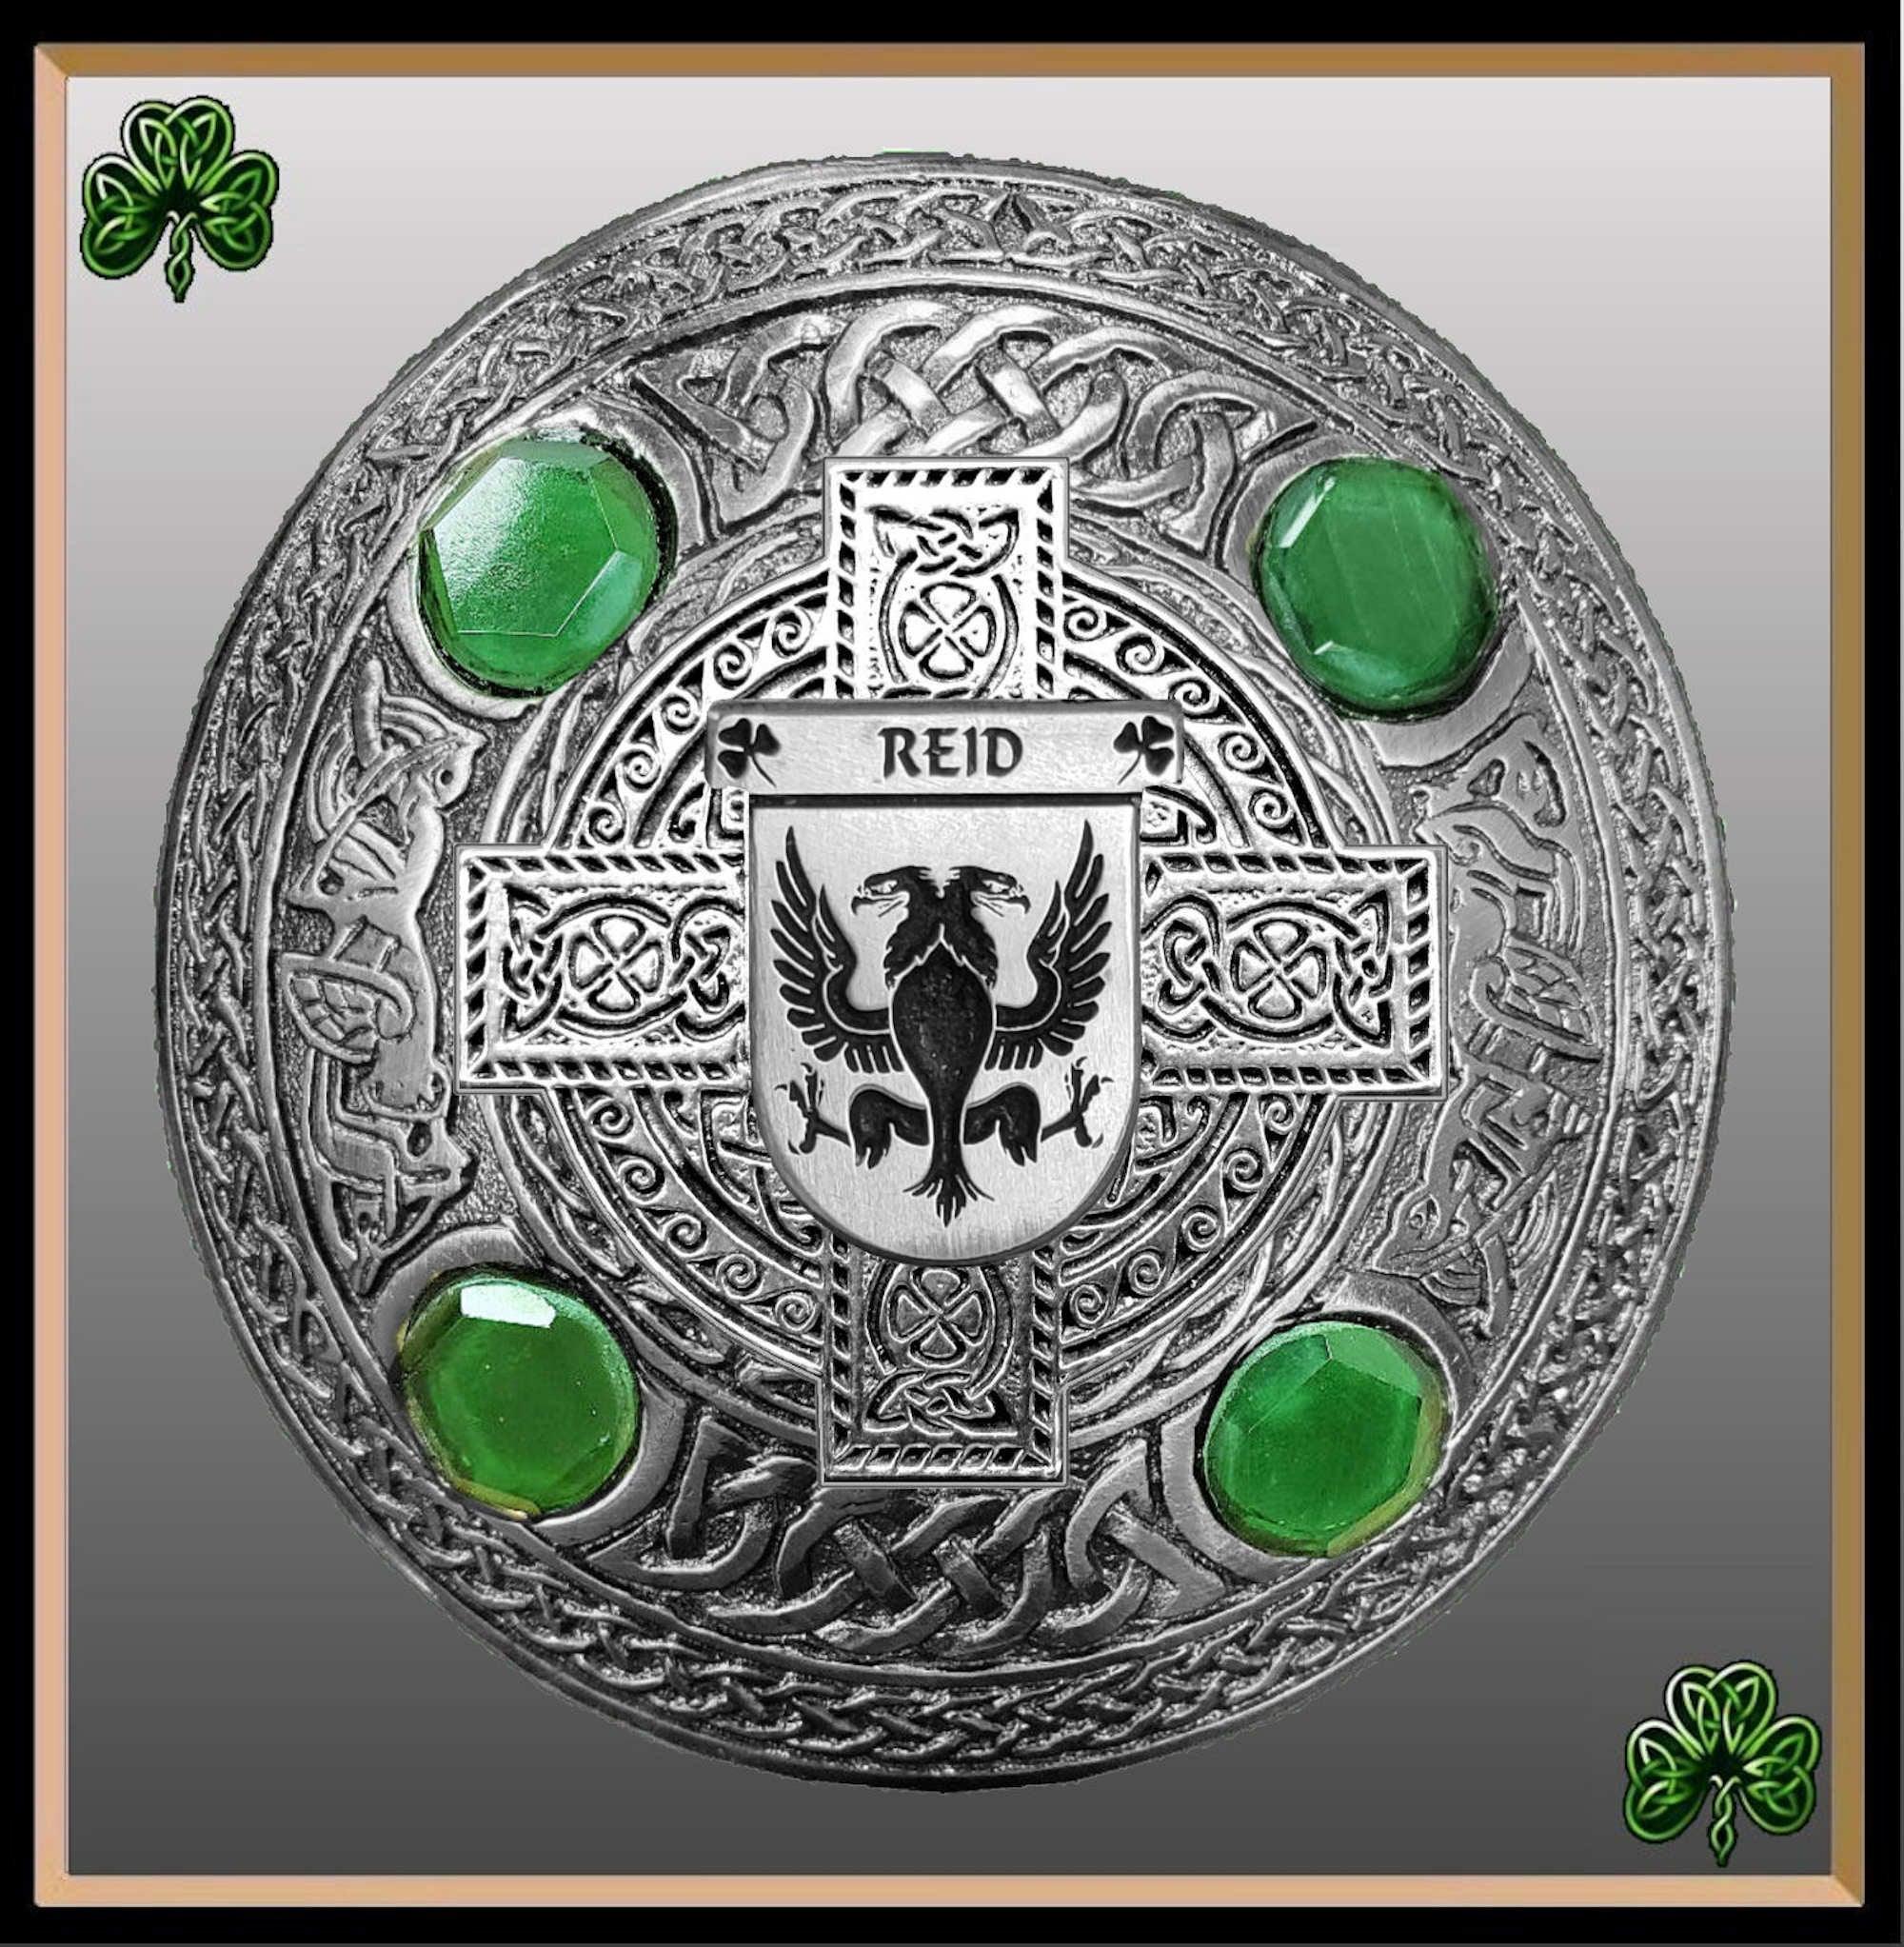 Reid Irish Coat of Arms Celtic Cross Plaid Brooch with Green Stones